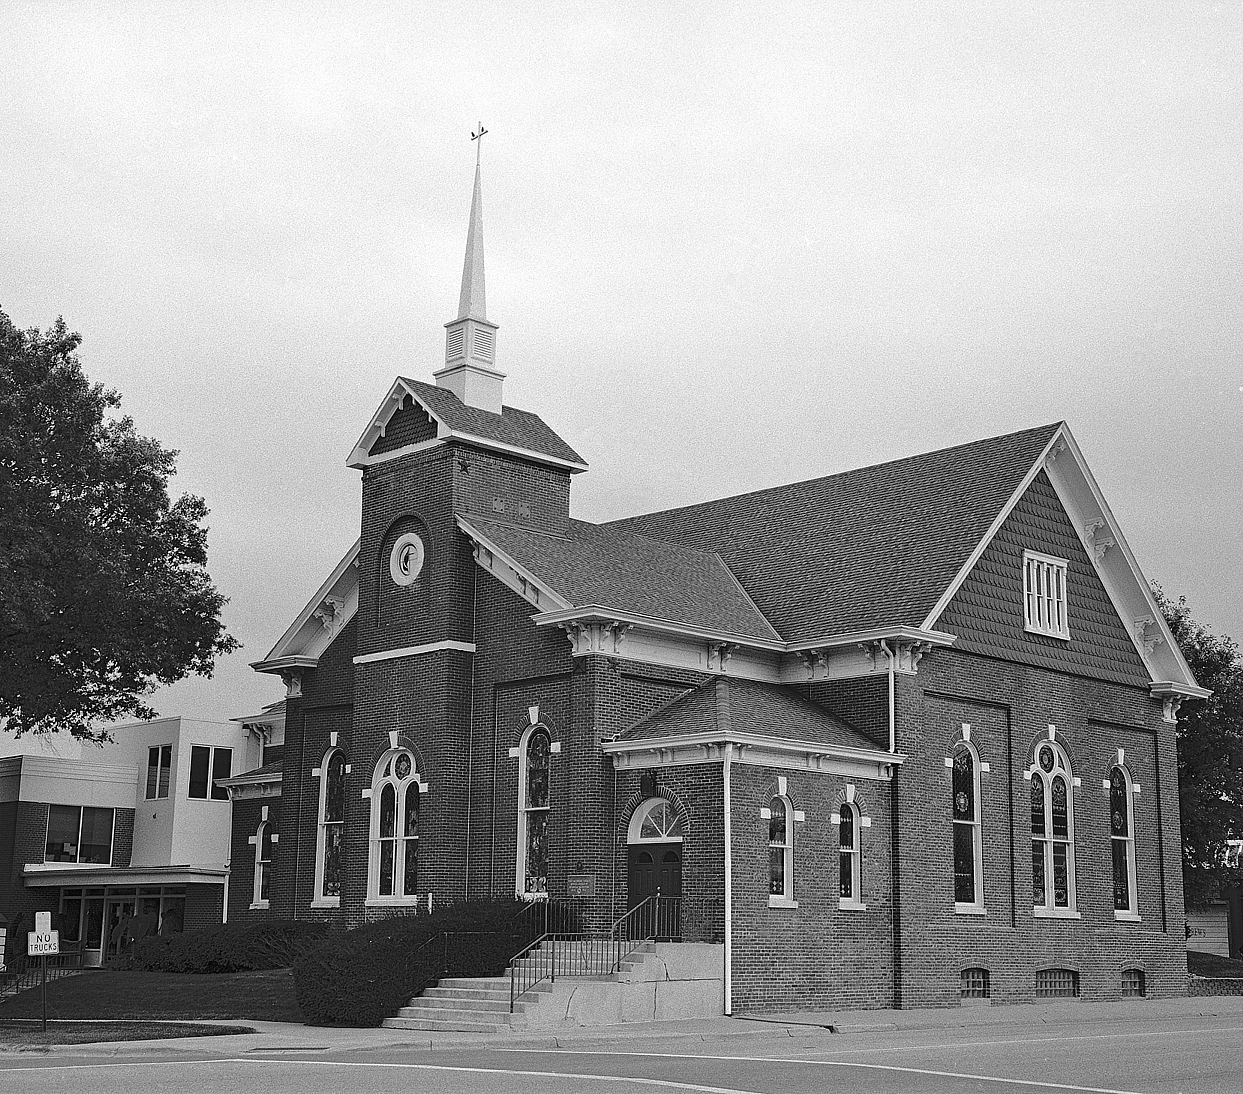  First United Methodist Church of Nebraska City - Mother Church of Methodism in Nebraska. &nbsp;Captured on Ilford HP5 Plus 400 film on a Fuji GW690iii medium format camera with a 90mm f3.5 lens and developed in Ilford DD-X. 